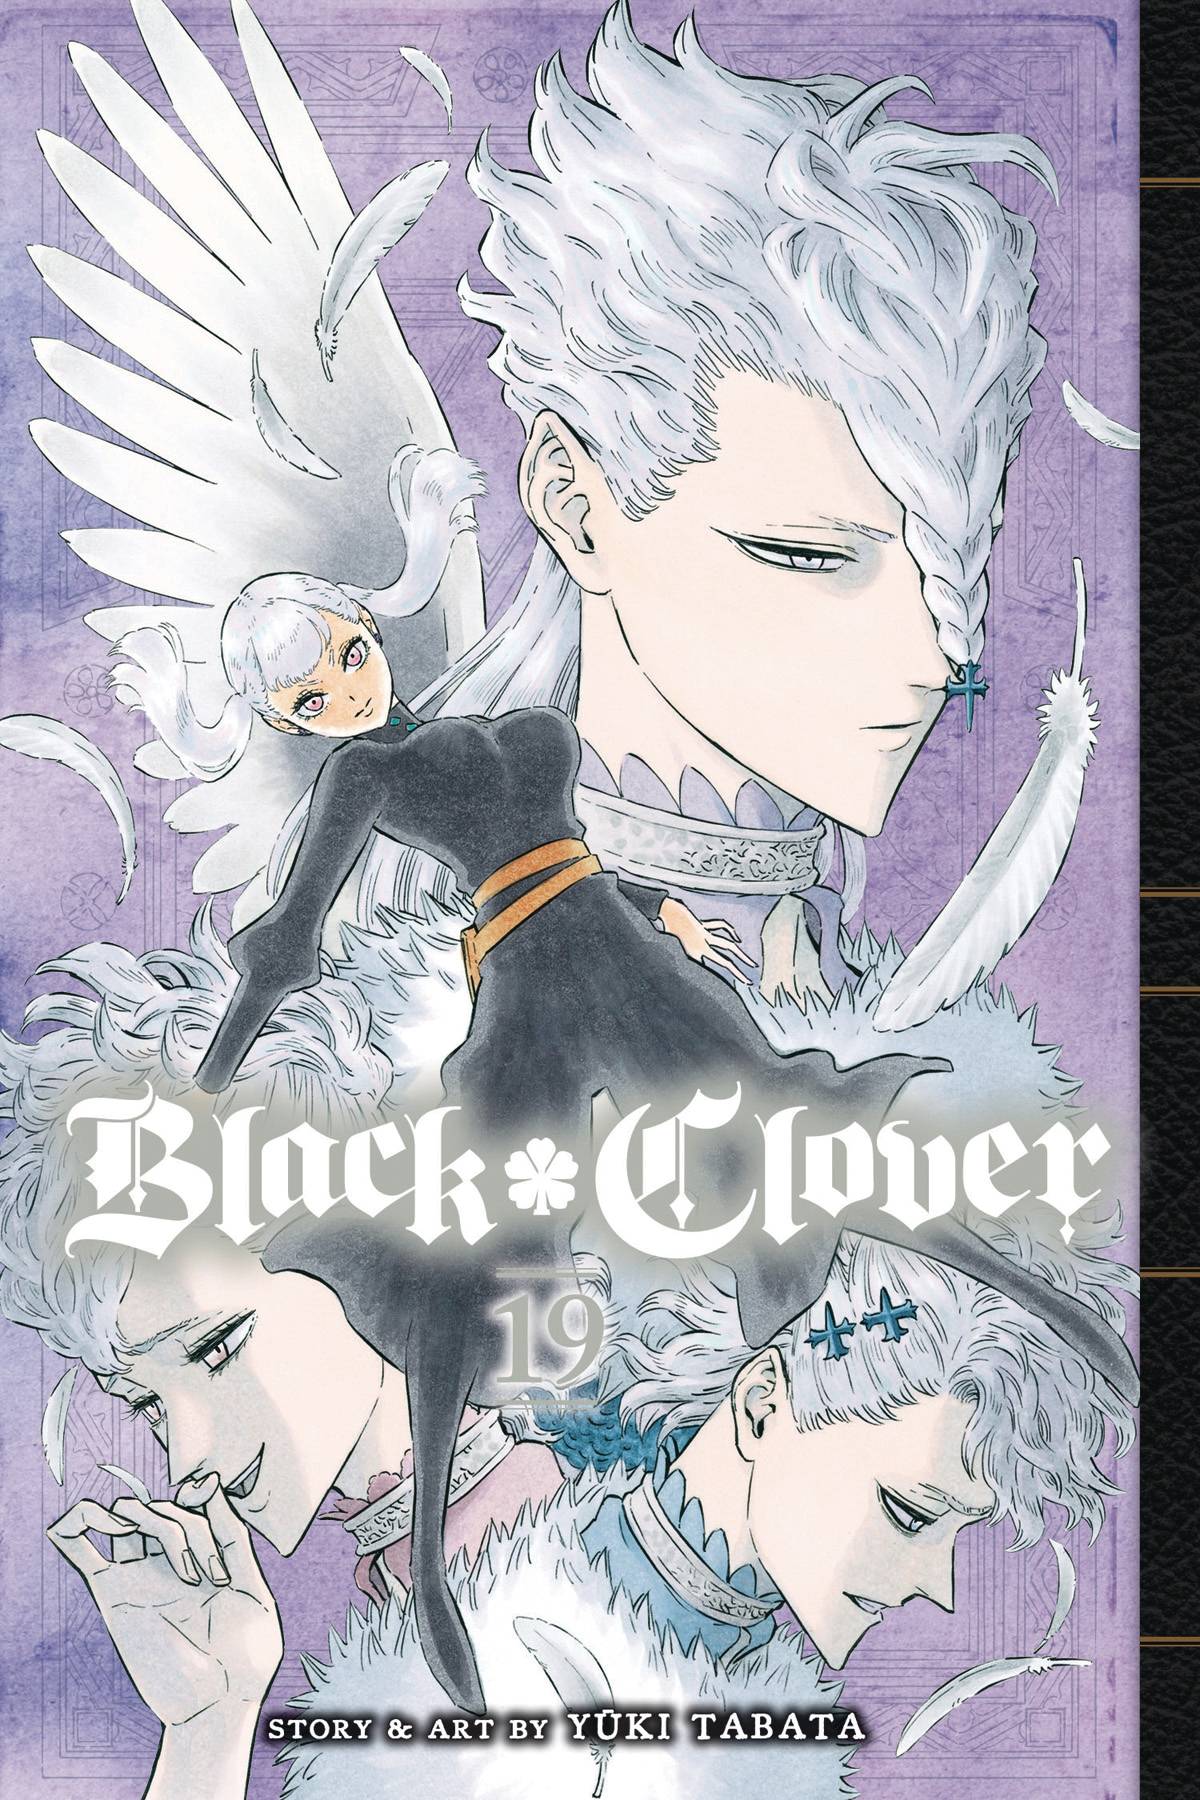 Black Clover Manga Volume 19